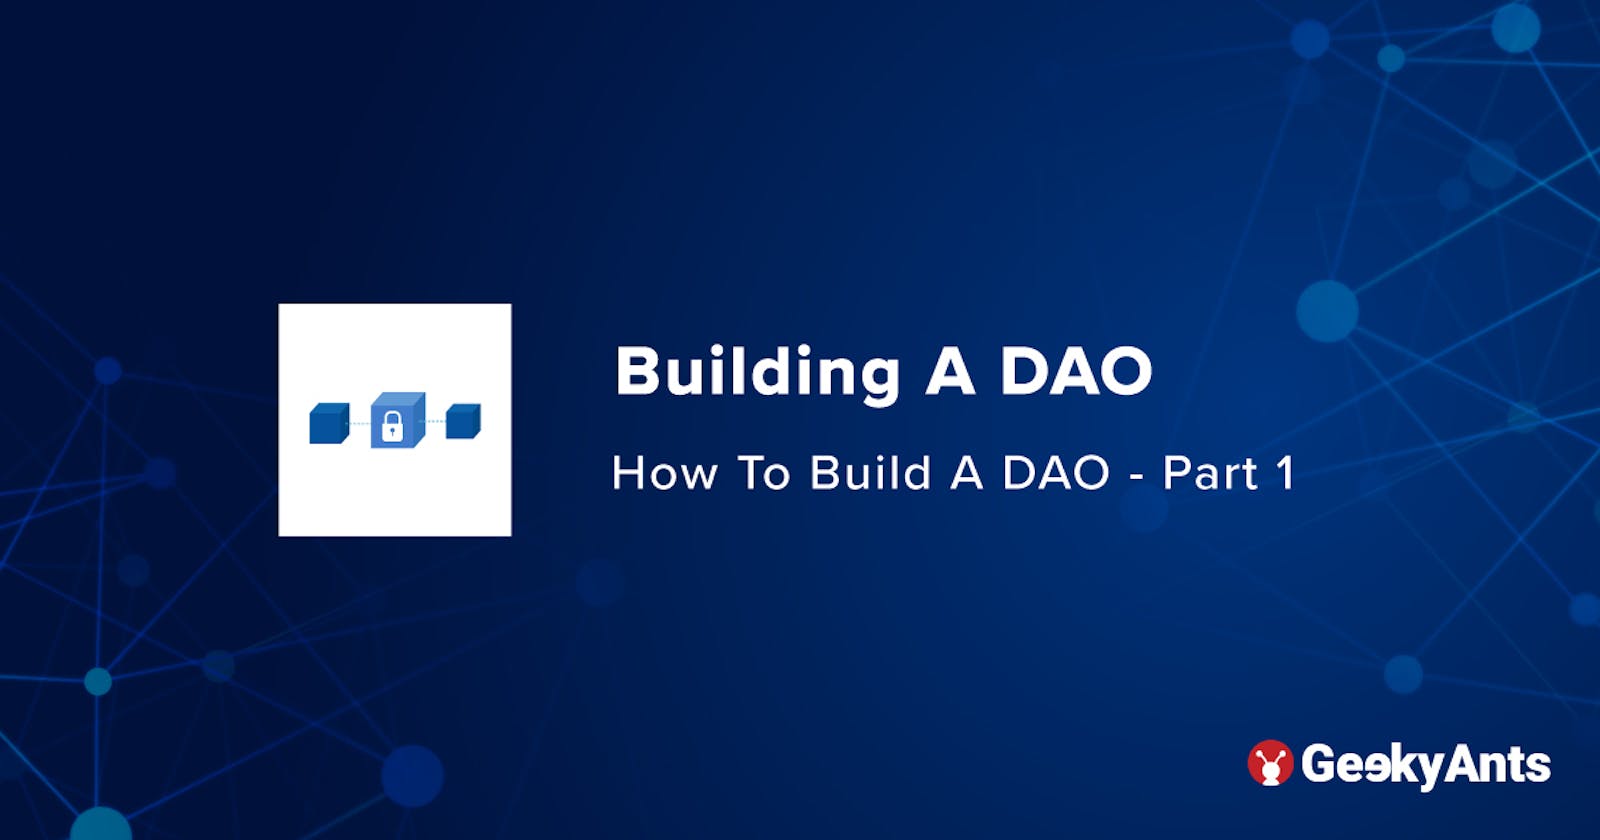 How To Build A DAO - Part 1